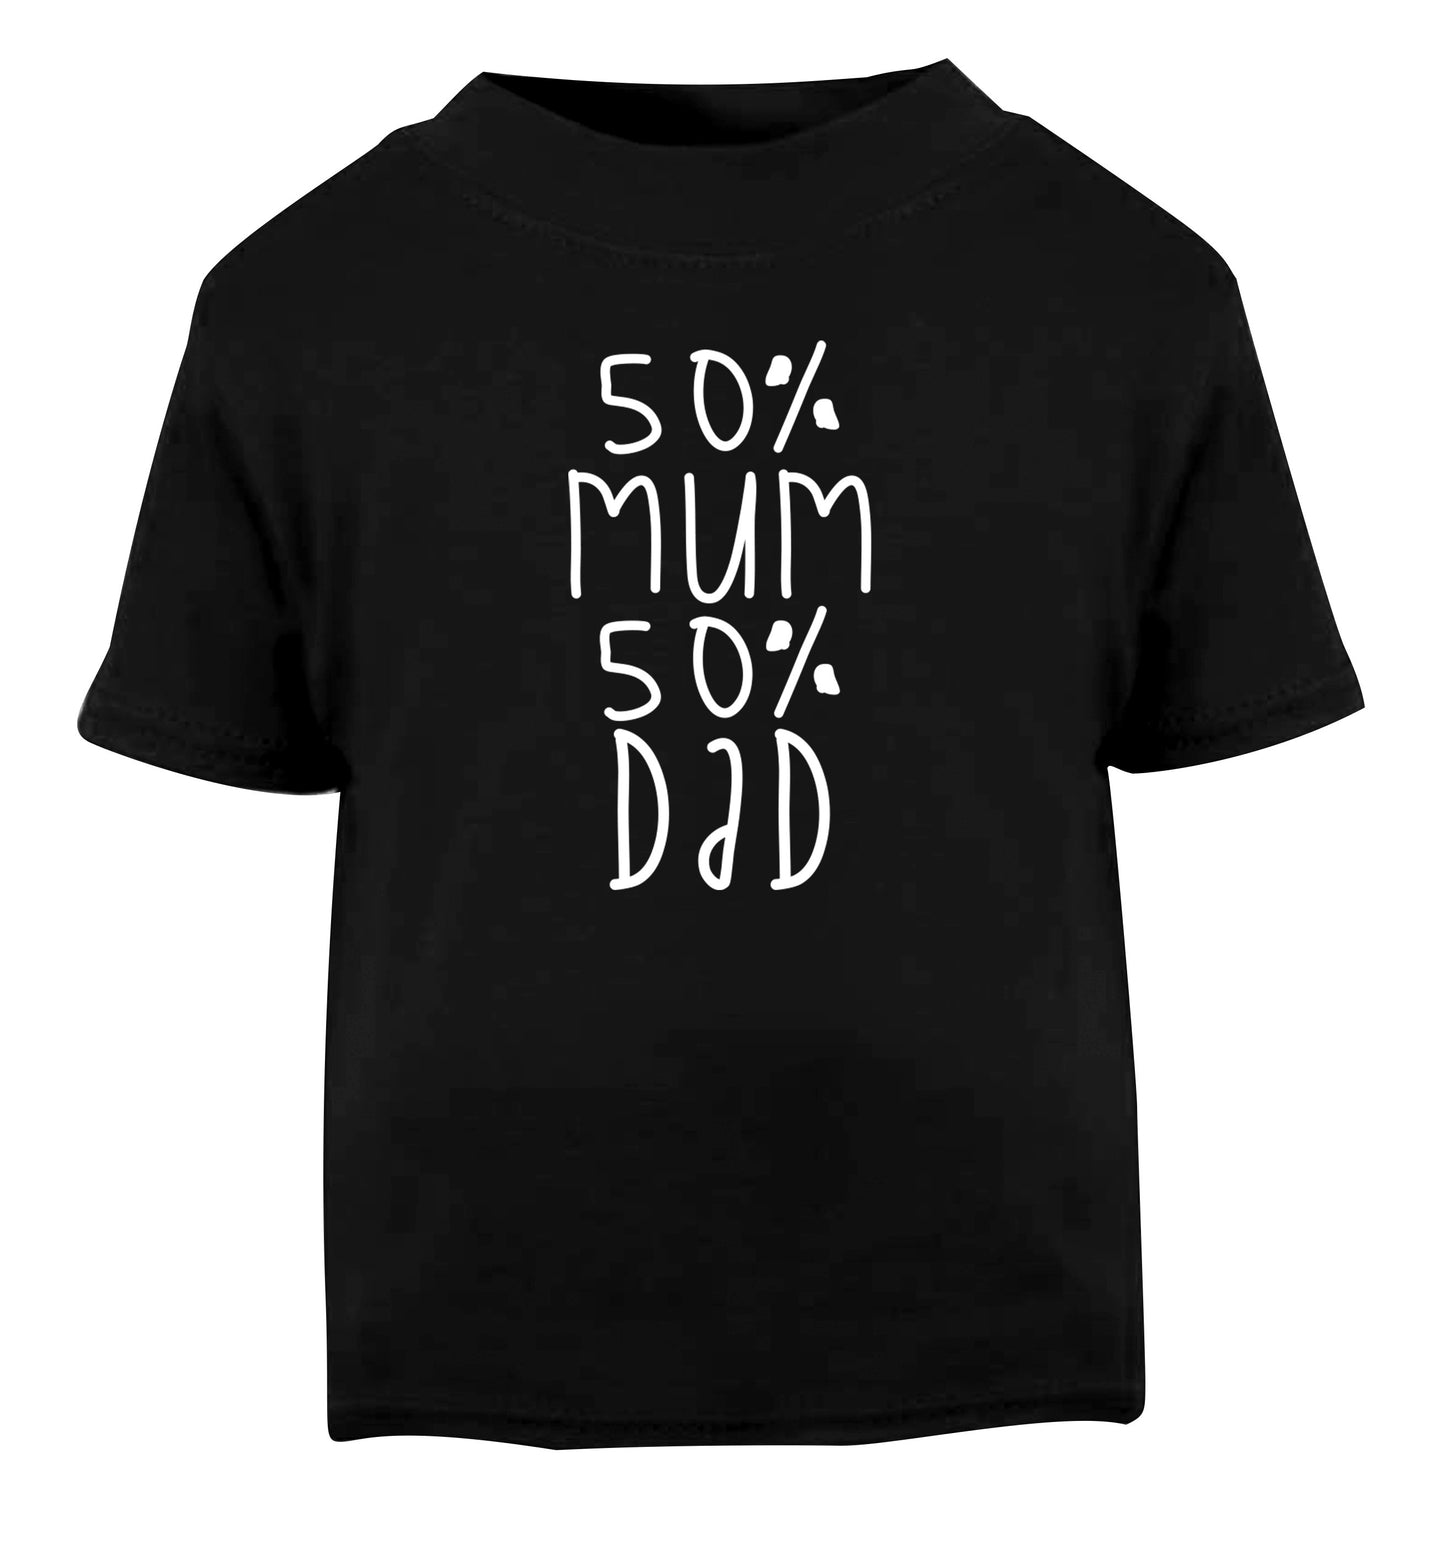 50% mum 50% dad Black Baby Toddler Tshirt 2 years